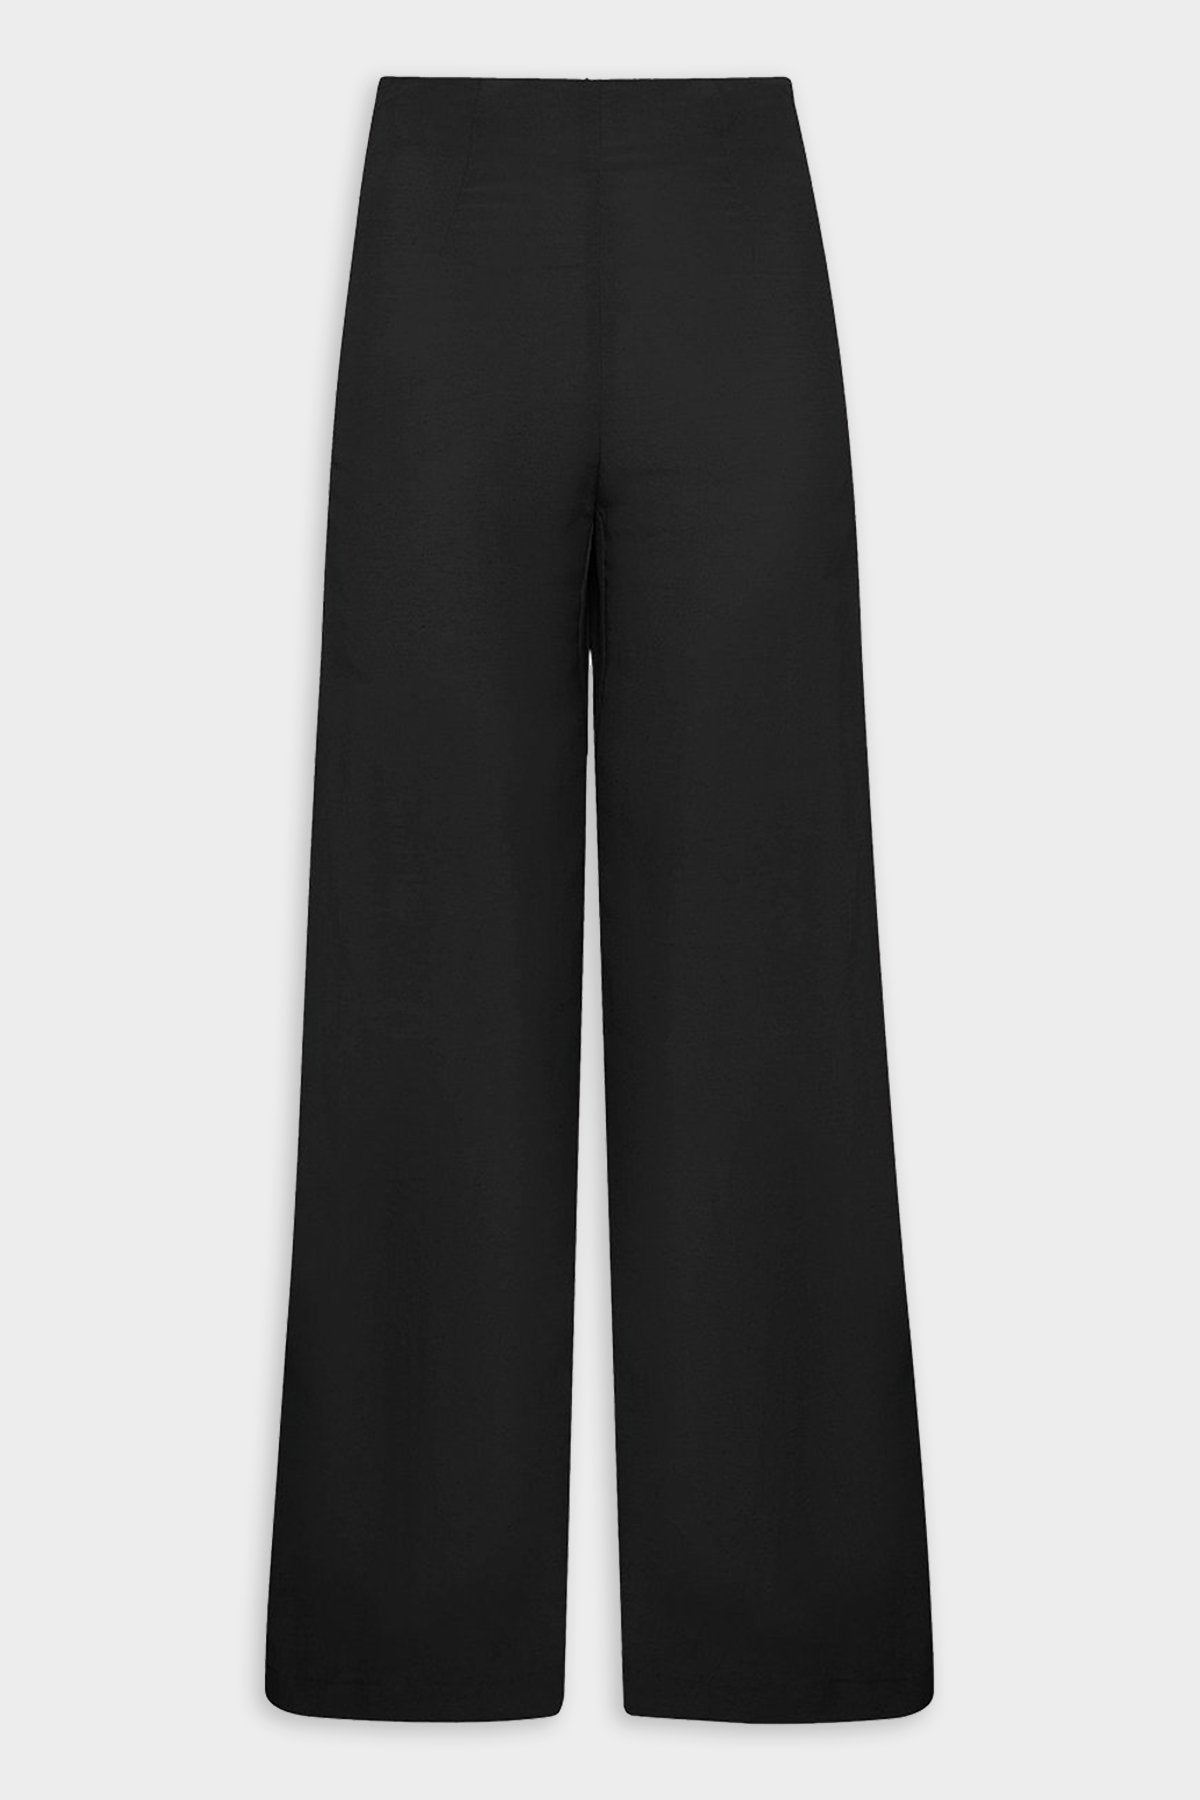 Amo Trousers in Black - shop-olivia.com